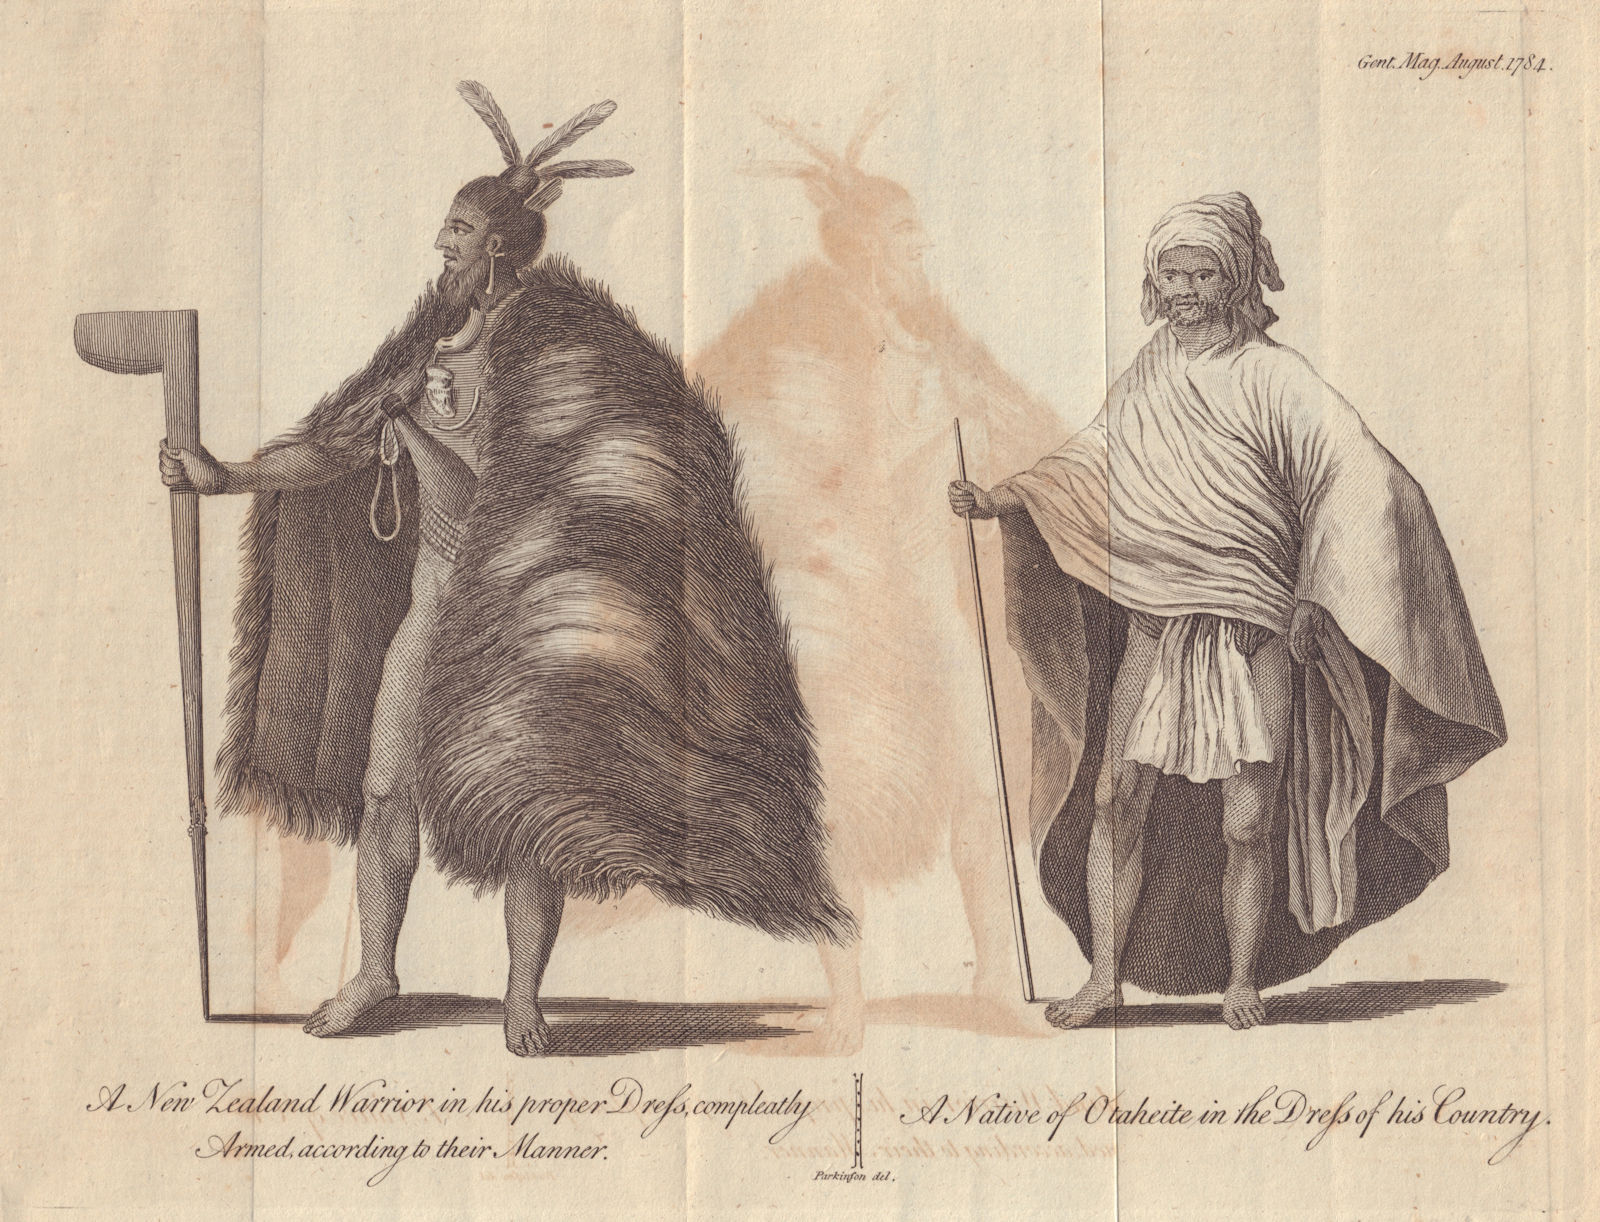 Associate Product New Zealand Warrior. A Native of Otaheite. Tahiti. Maori. GENTS MAG 1784 print